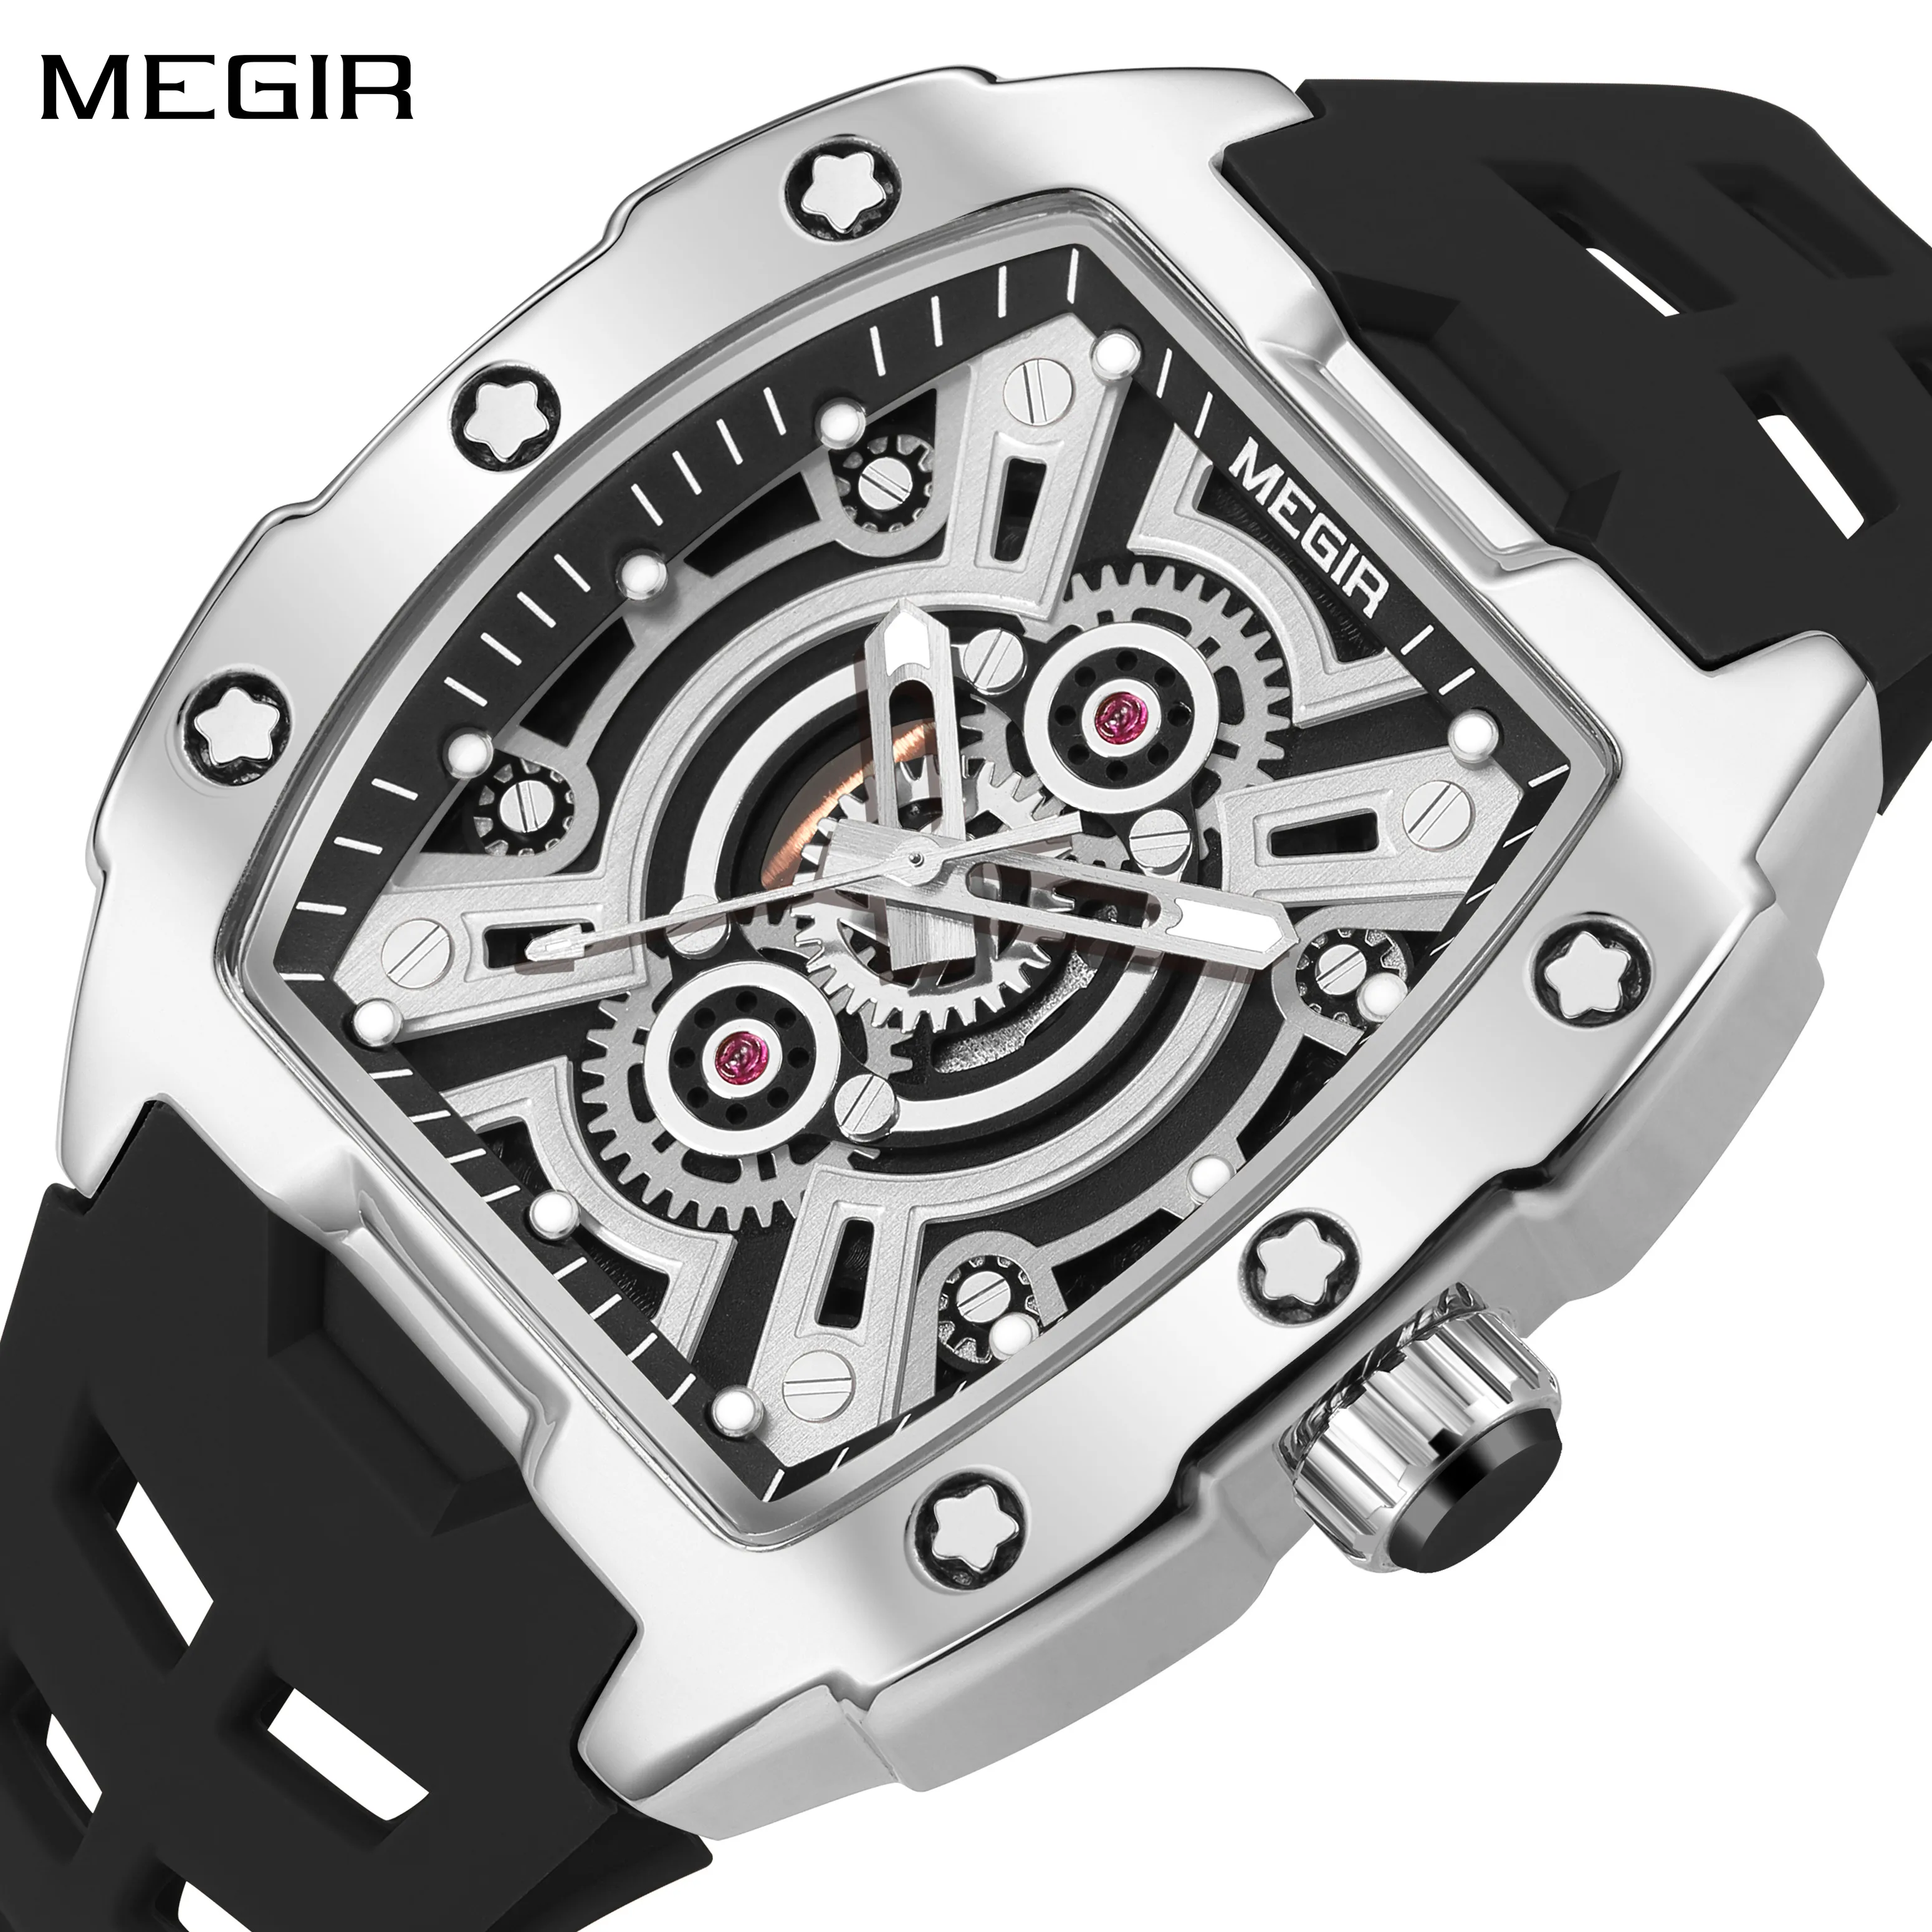 

MEGIR Luxury Men's Watch Fashion Design Quartz Watches Military Sports Luminous Hands Wristwatch Clock Casual Relogio Masculino